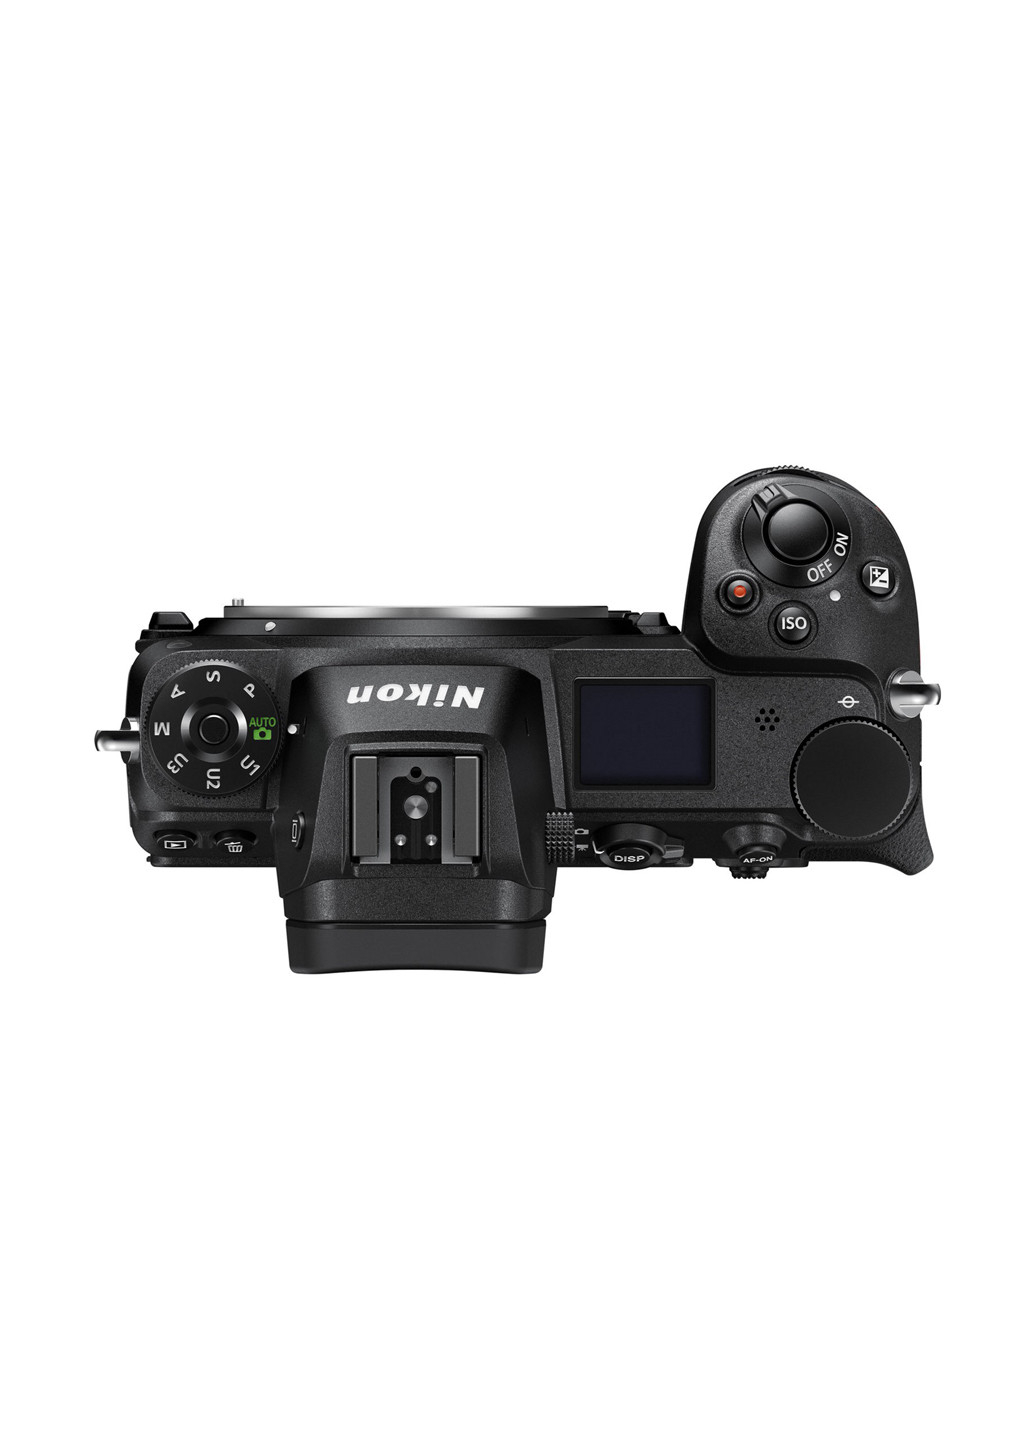 Системна фотокамера Z 7 Body Nikon nikon z 7 body (134769283)